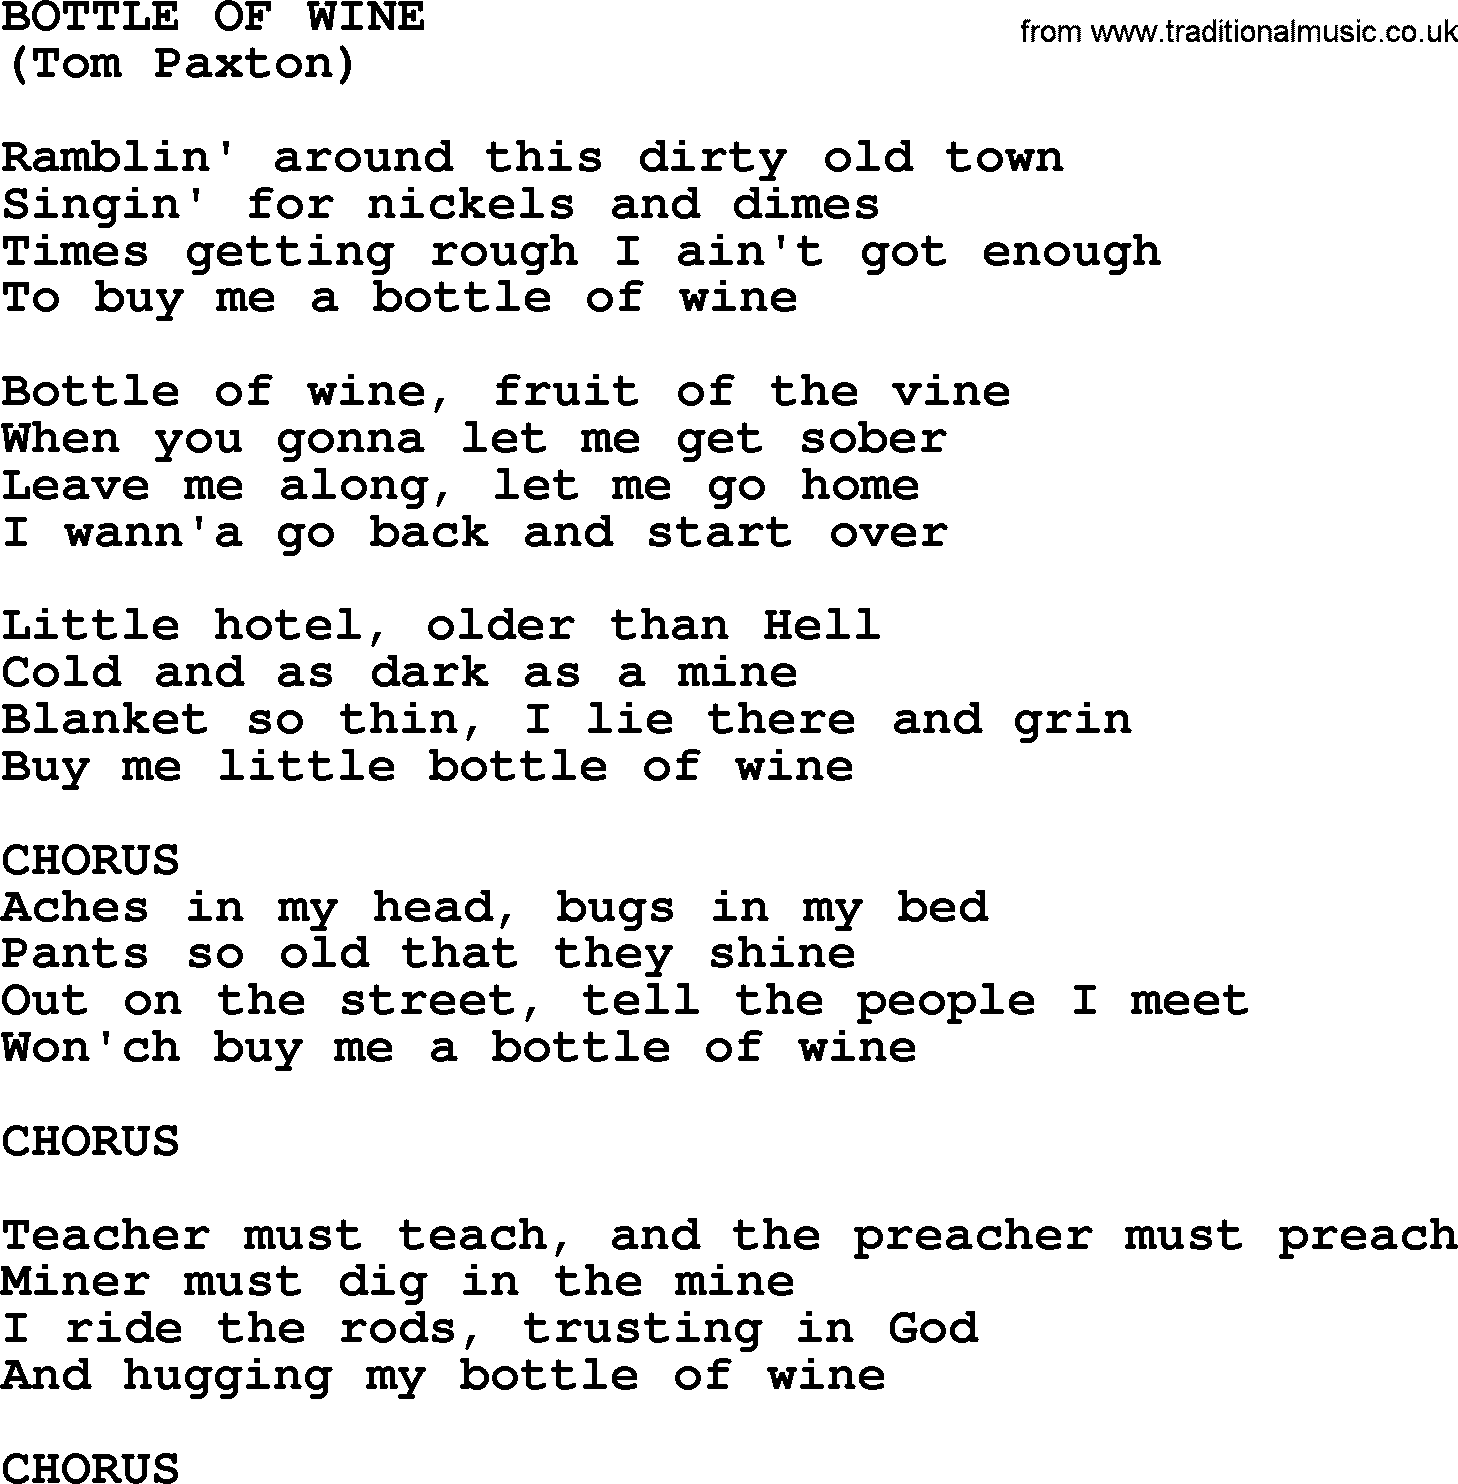 Tom Paxton song: Bottle Of Wine, lyrics